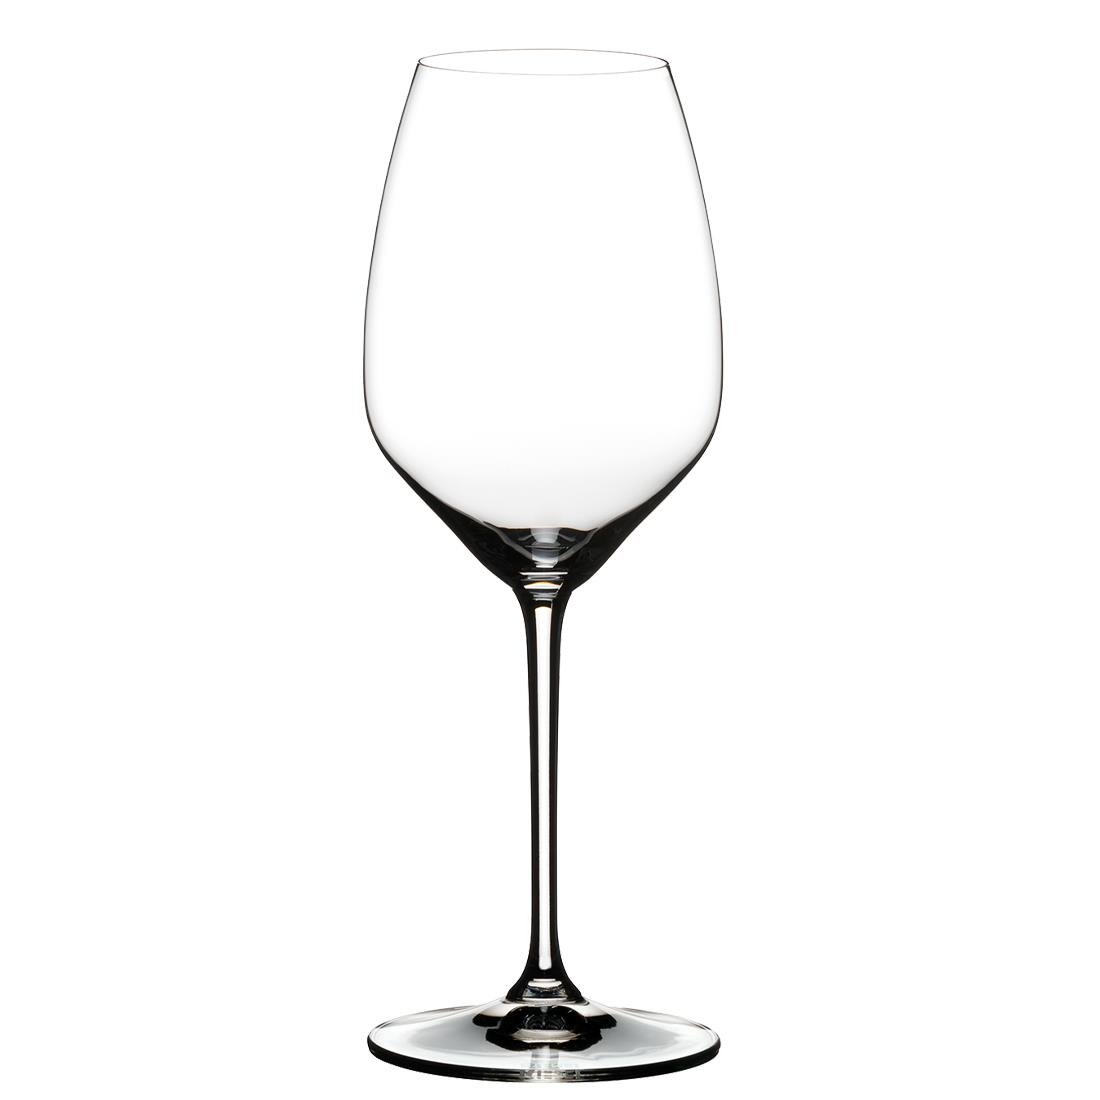 RIEDEL Extreme Riesling/Sauvignon Blanc Gläser 460ml (12 Stück)